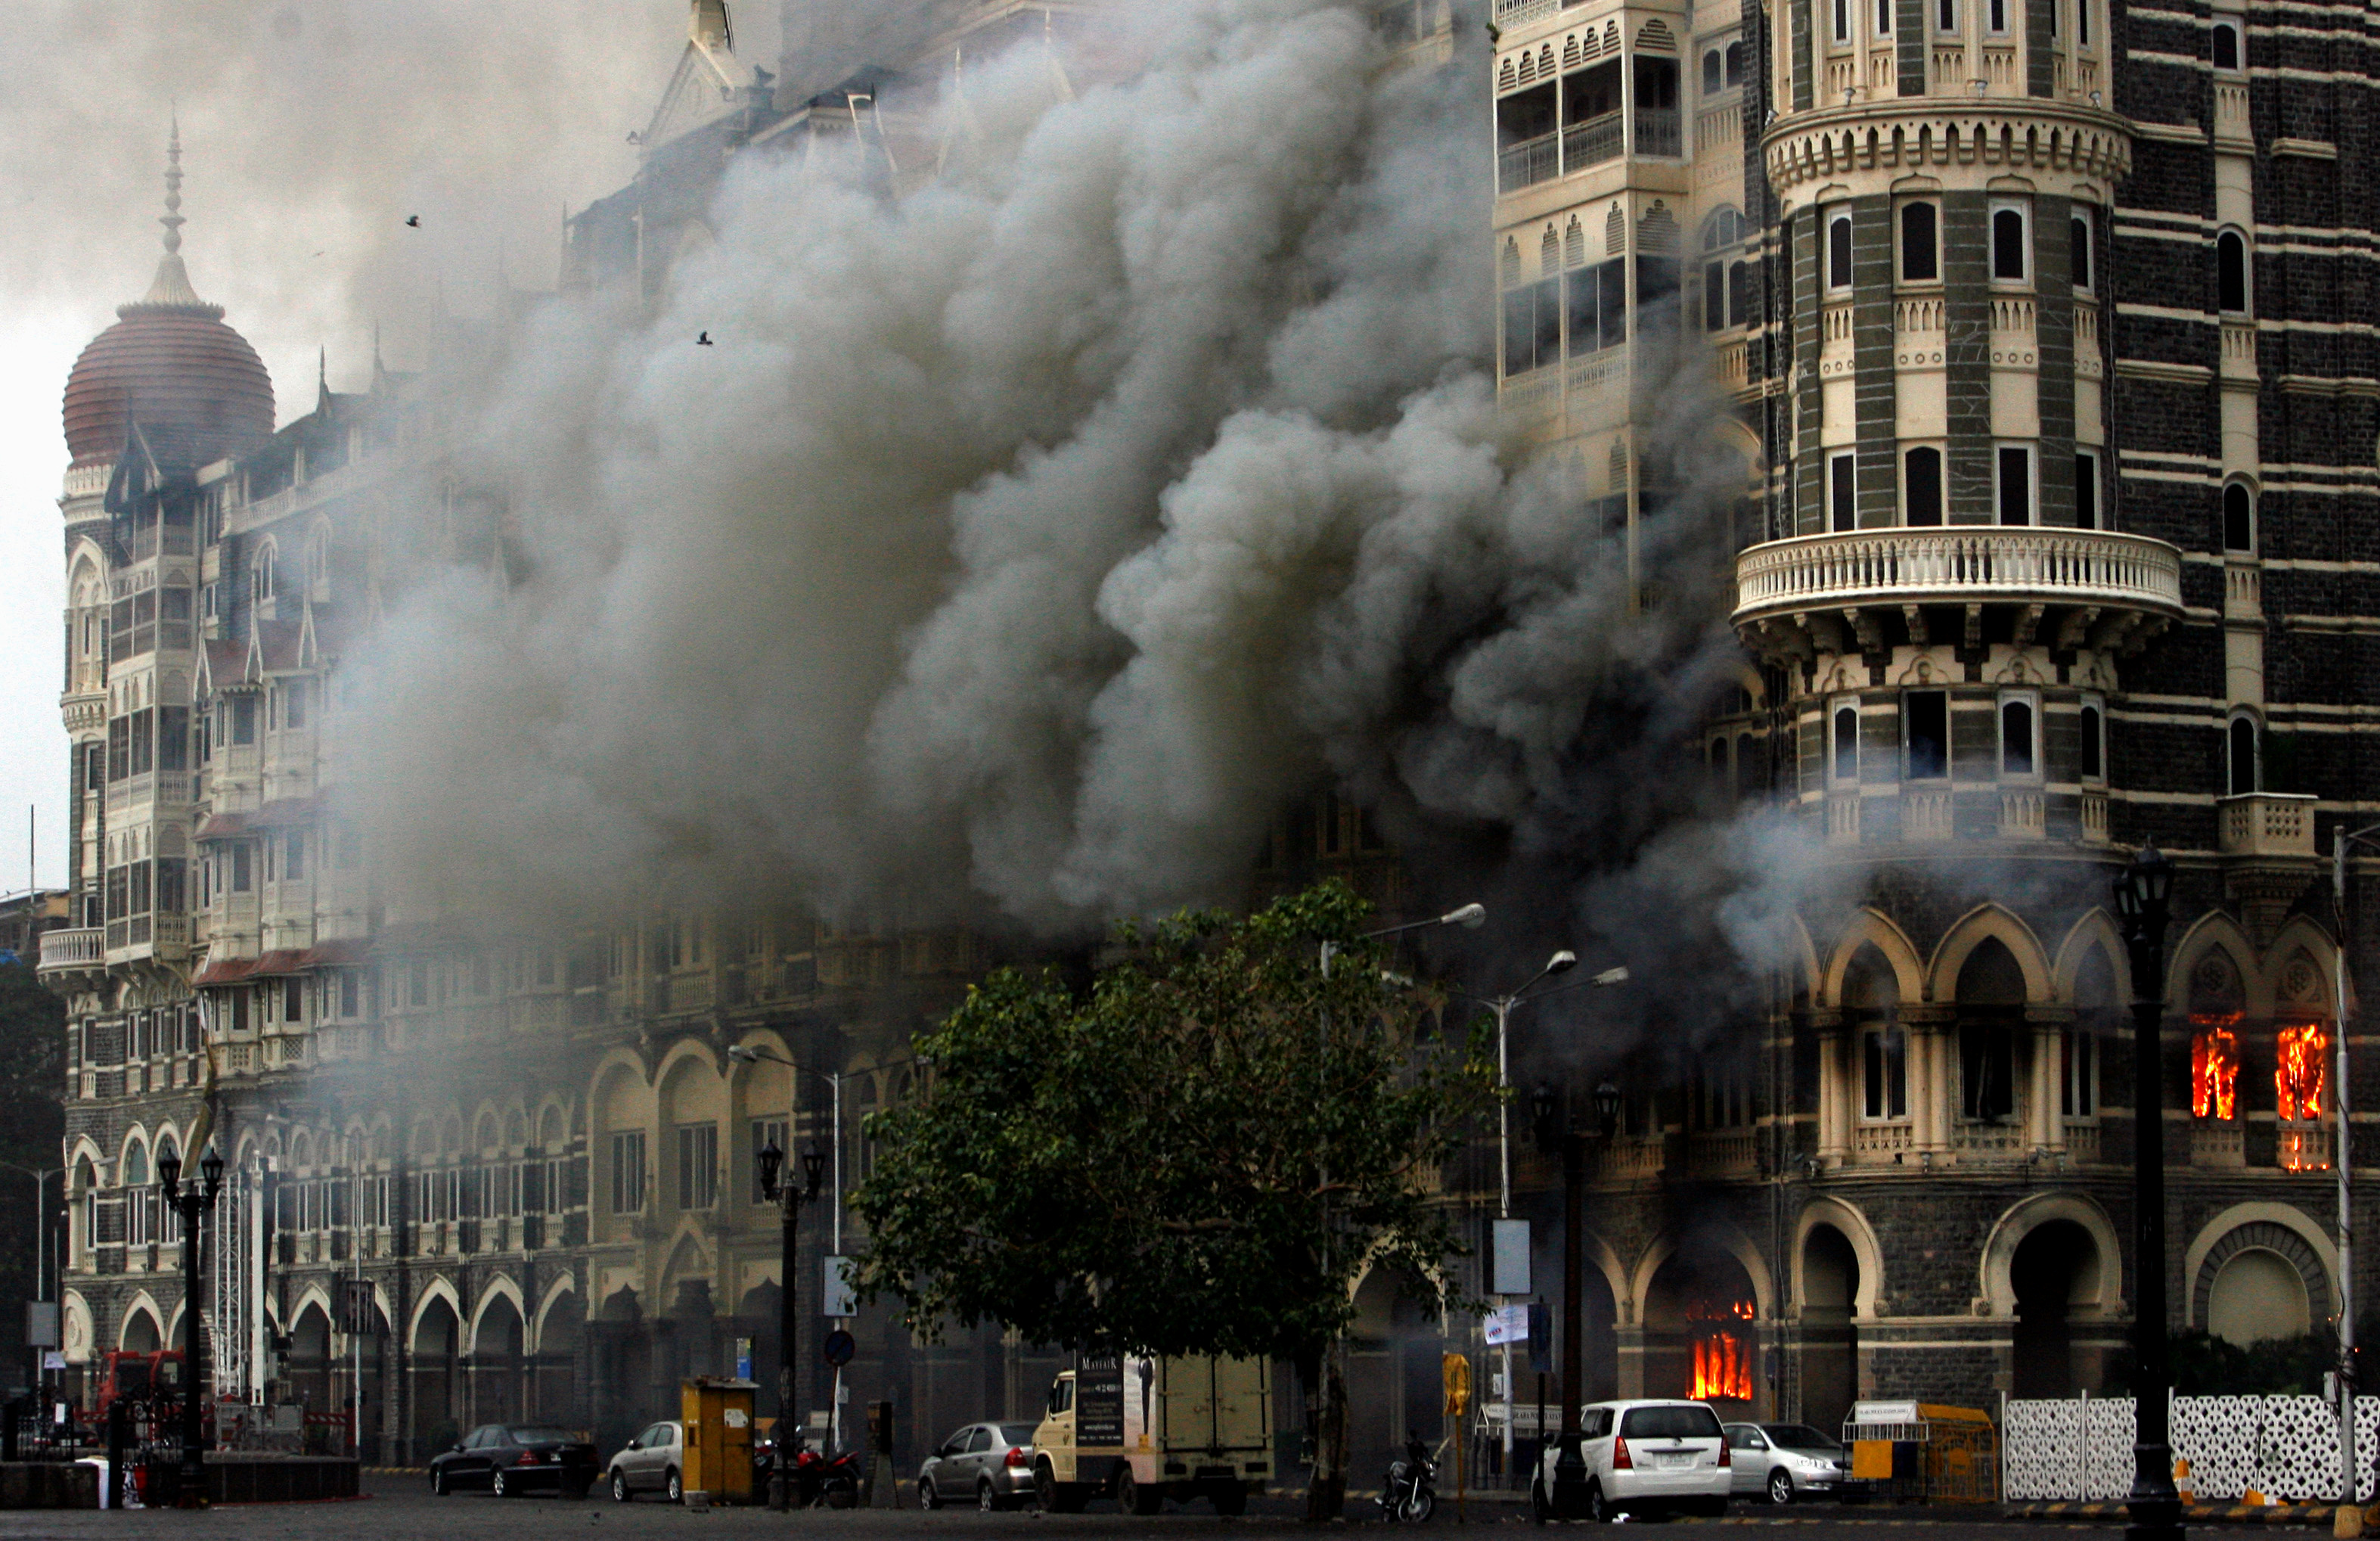 Terrorist attack in russia. Мумбаи 2008 Тадж Махал теракт. Теракт в Индии 2008 Тадж Махал. Индия 2008 теракт отель Мумбаи.